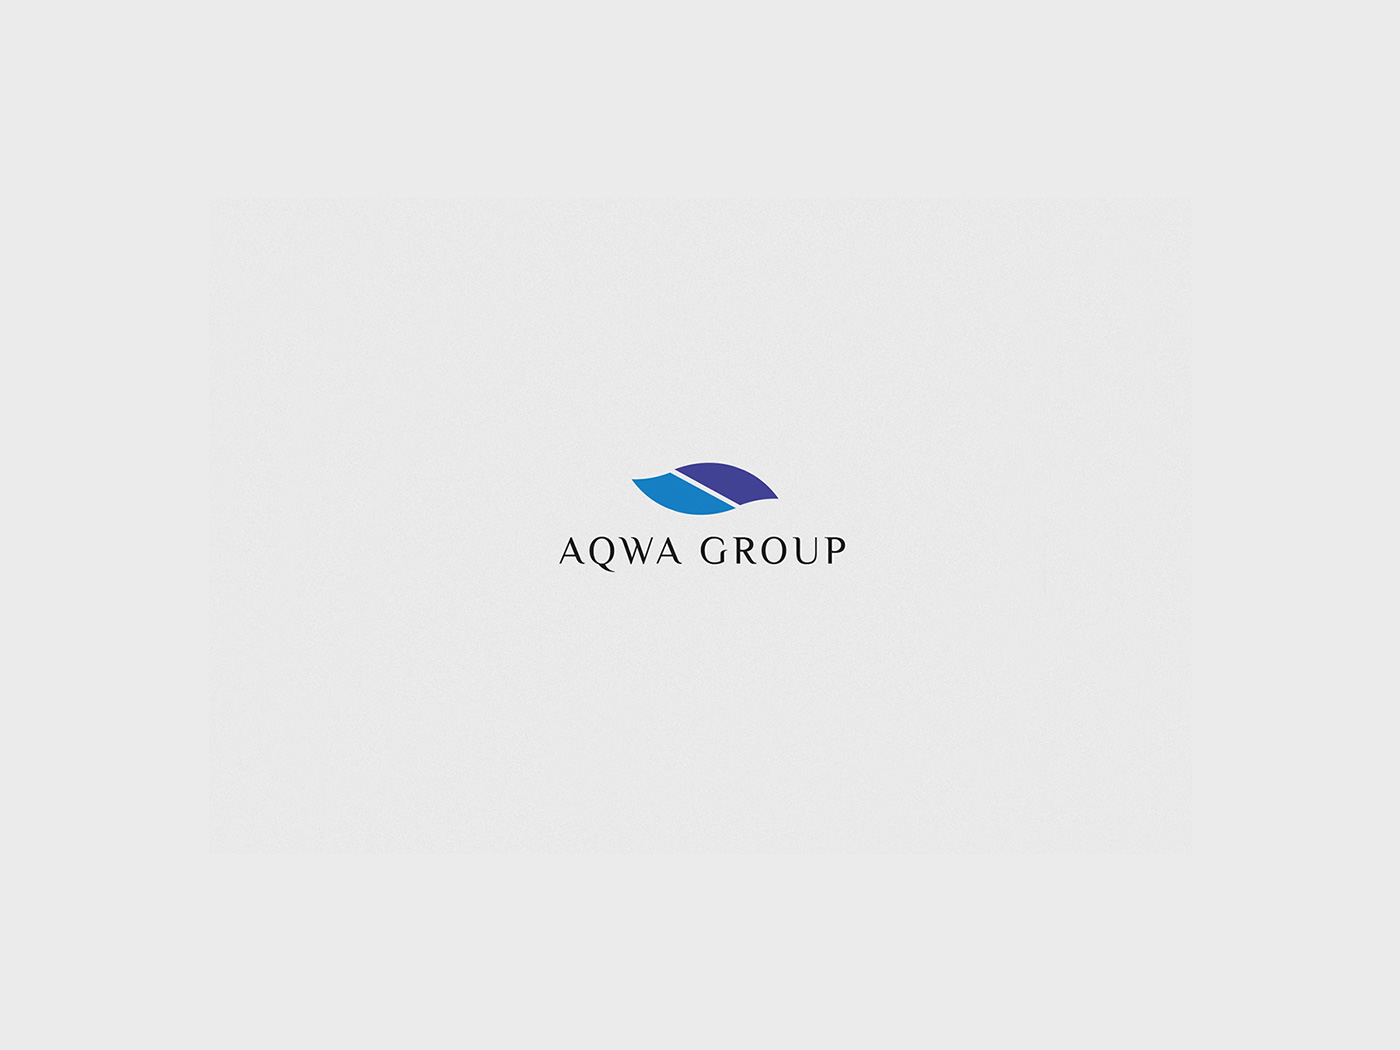 Aqwa group logo